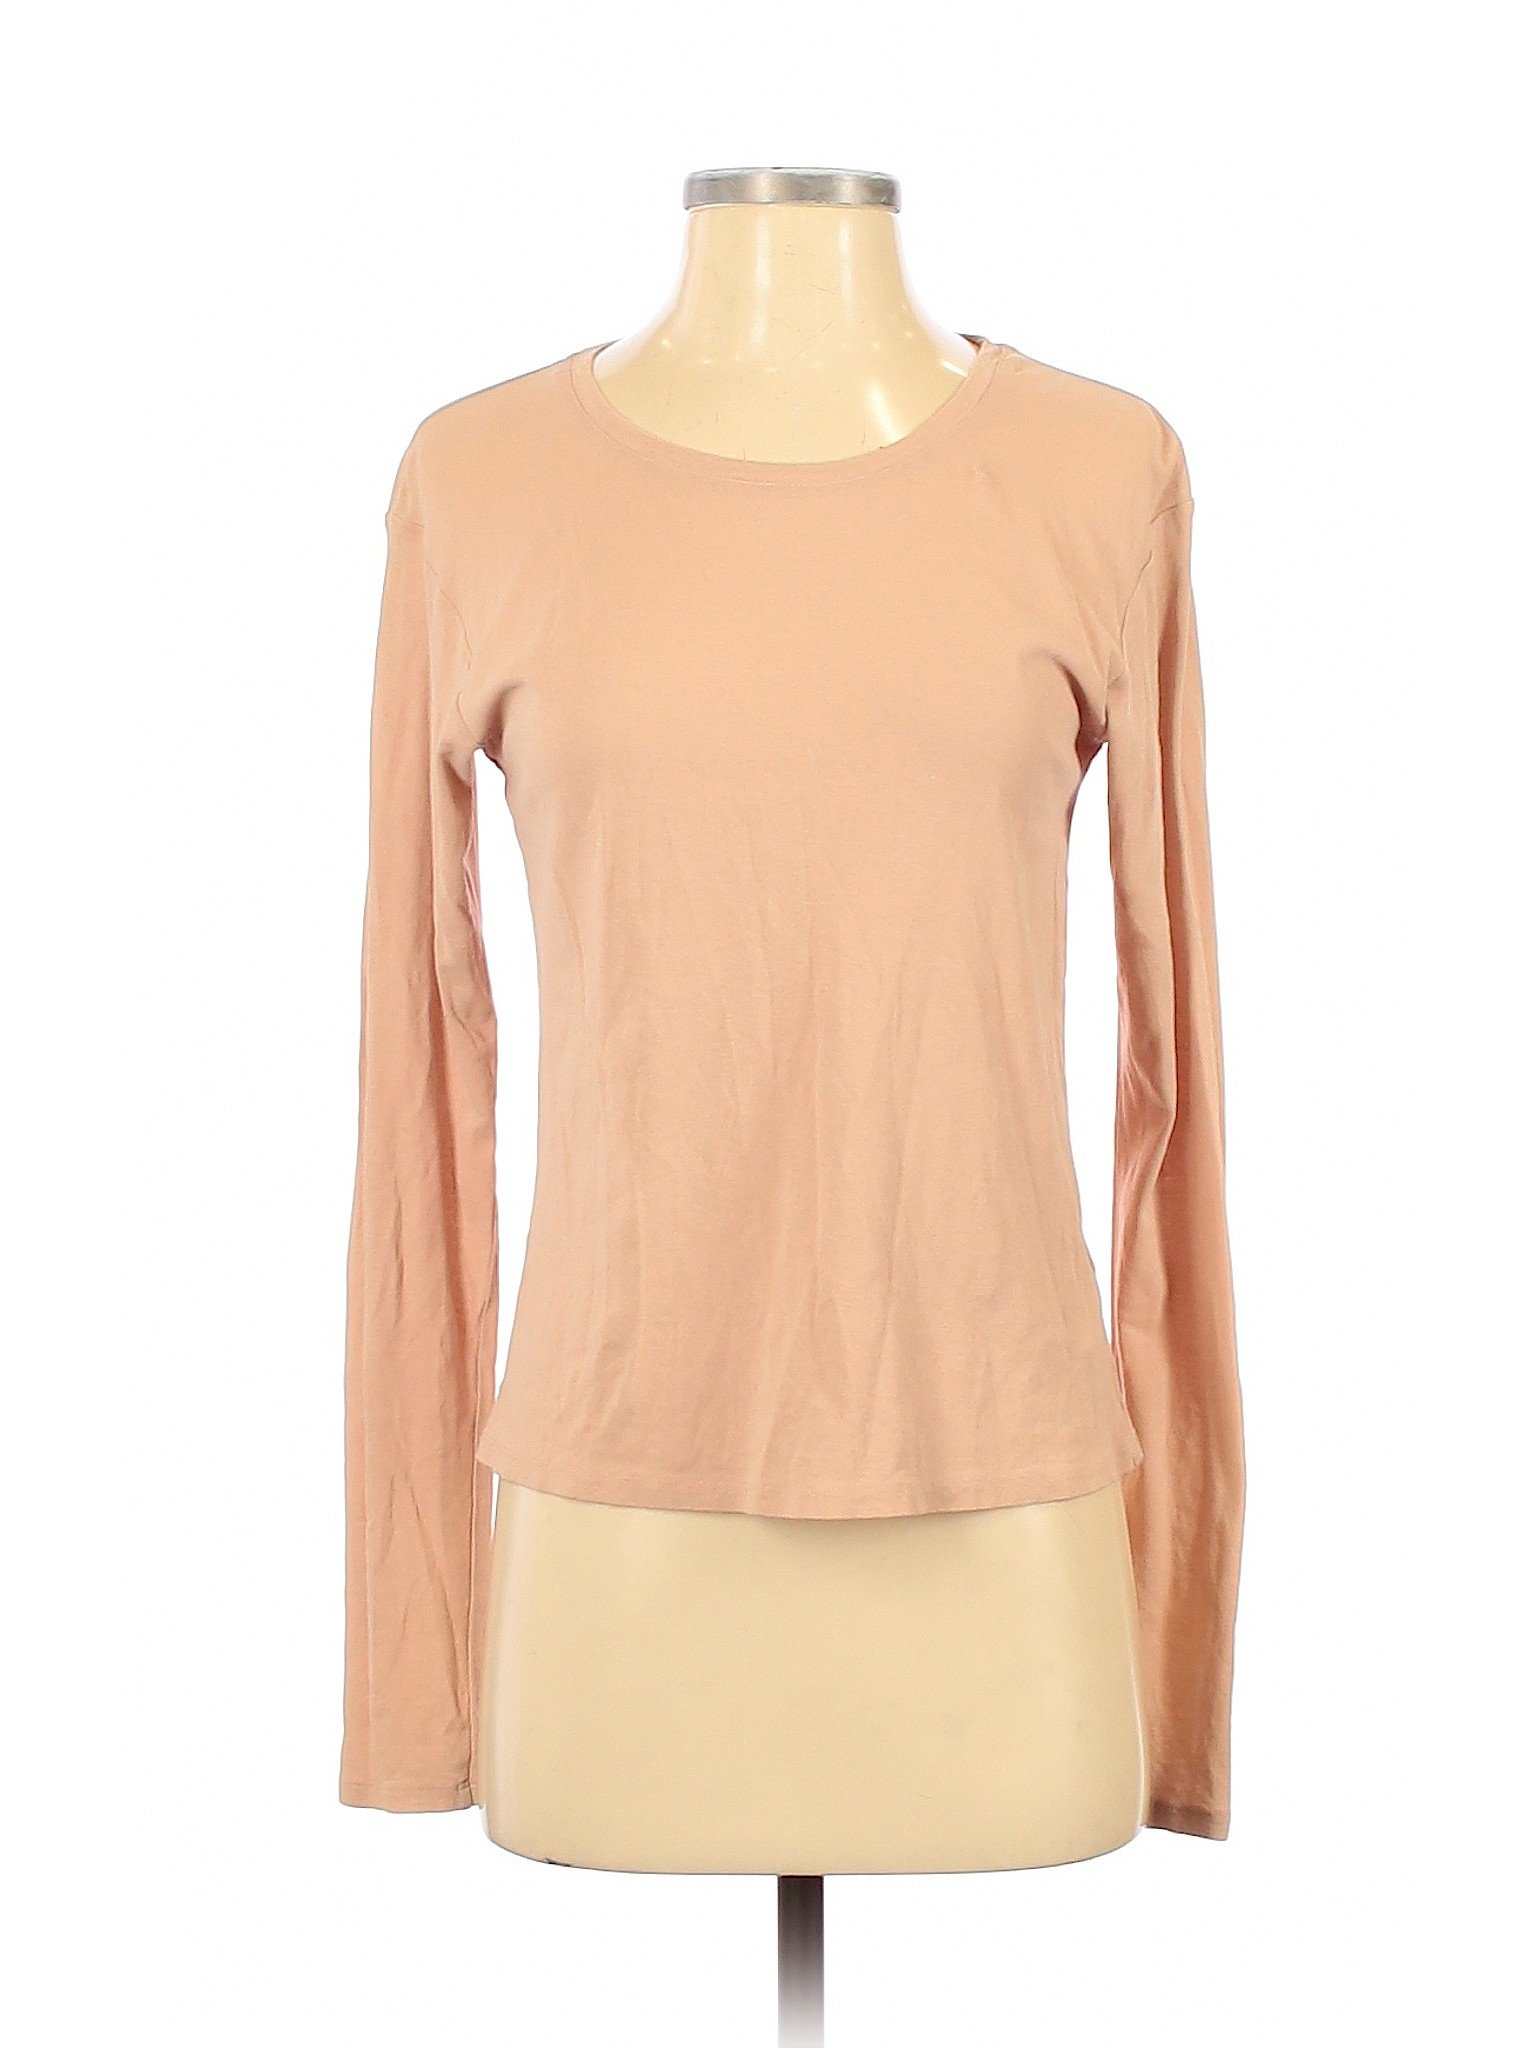 H&M Women Orange Long Sleeve Top 4 | eBay